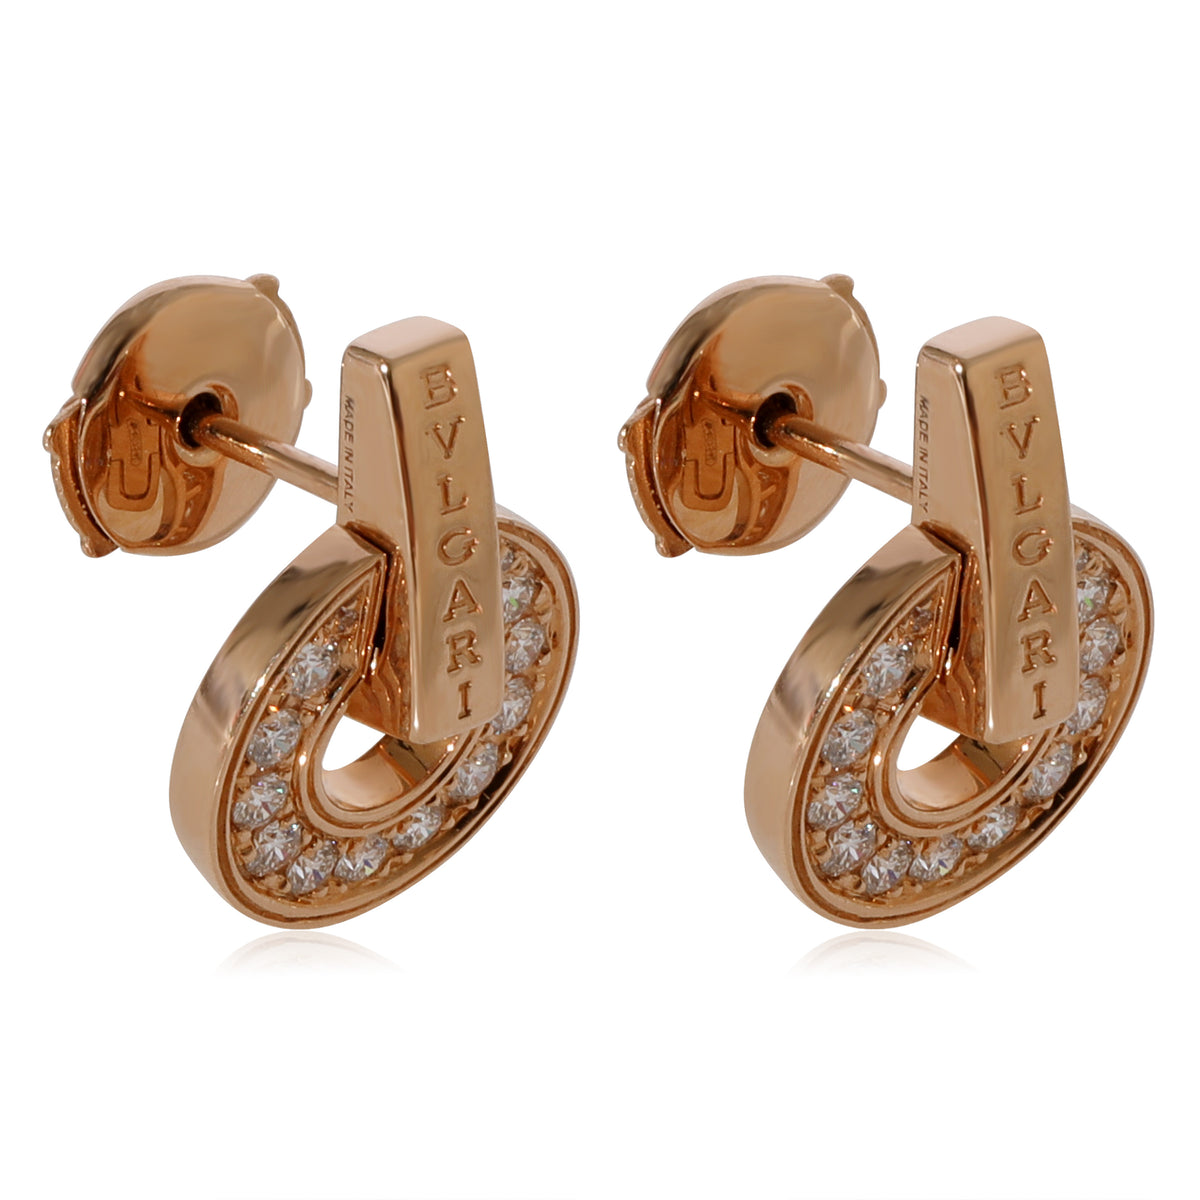 BVLGARI Bvlgari Bvlgari Diamond Earrings in 18k Rose Gold 0.38 CTW